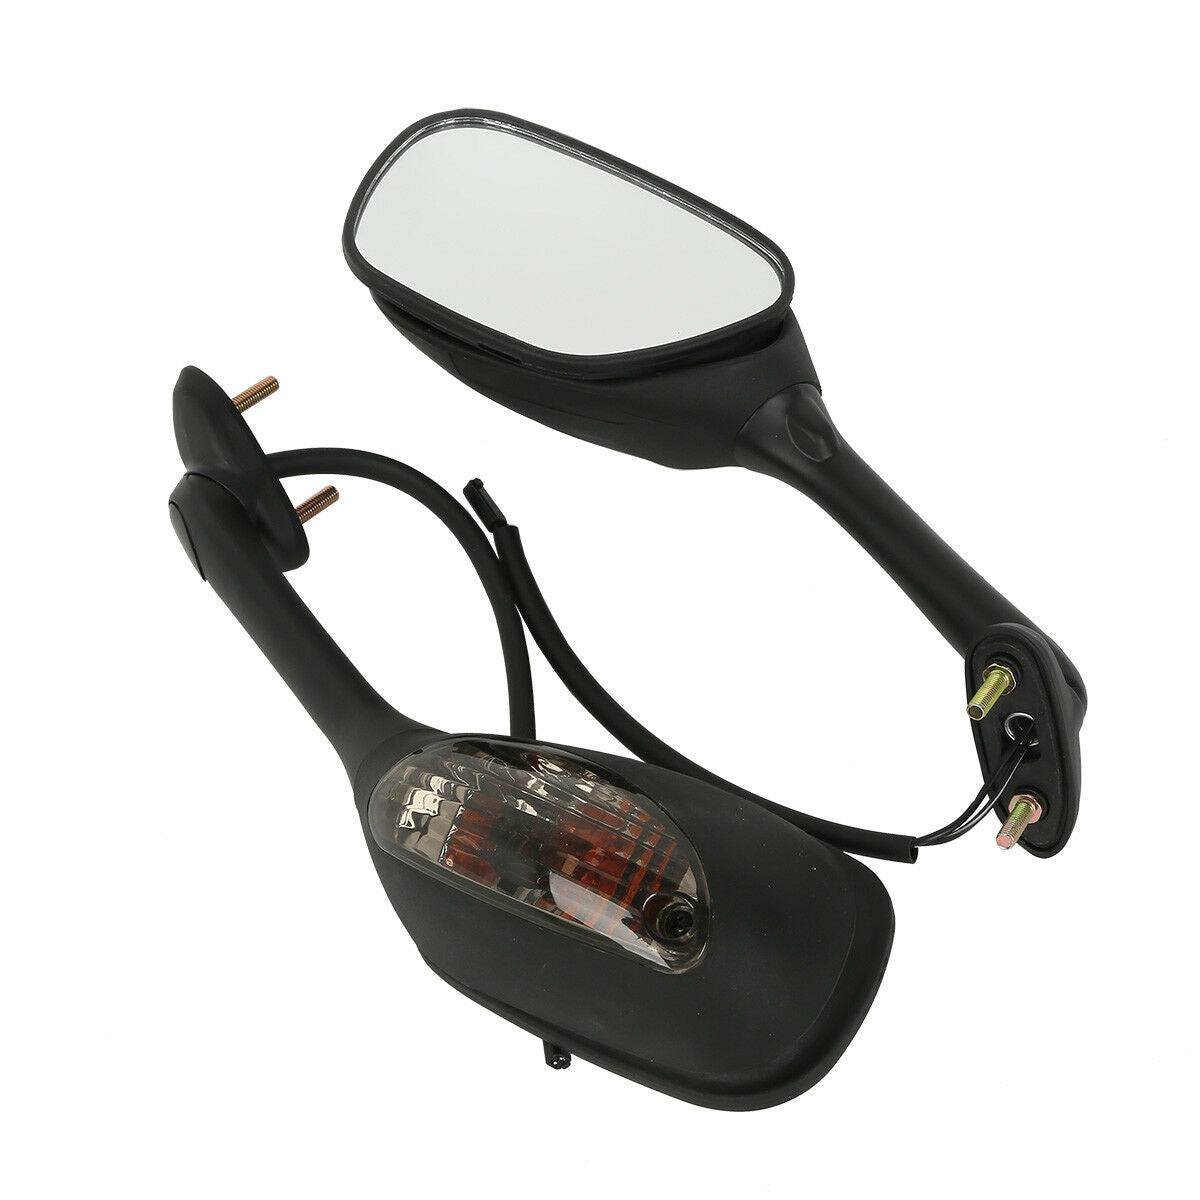 Rearview Mirrors w/ Turn Signal Fit For Suzuki GSXR 1000 GSXR600 GSX-R 750 06-15 - Moto Life Products